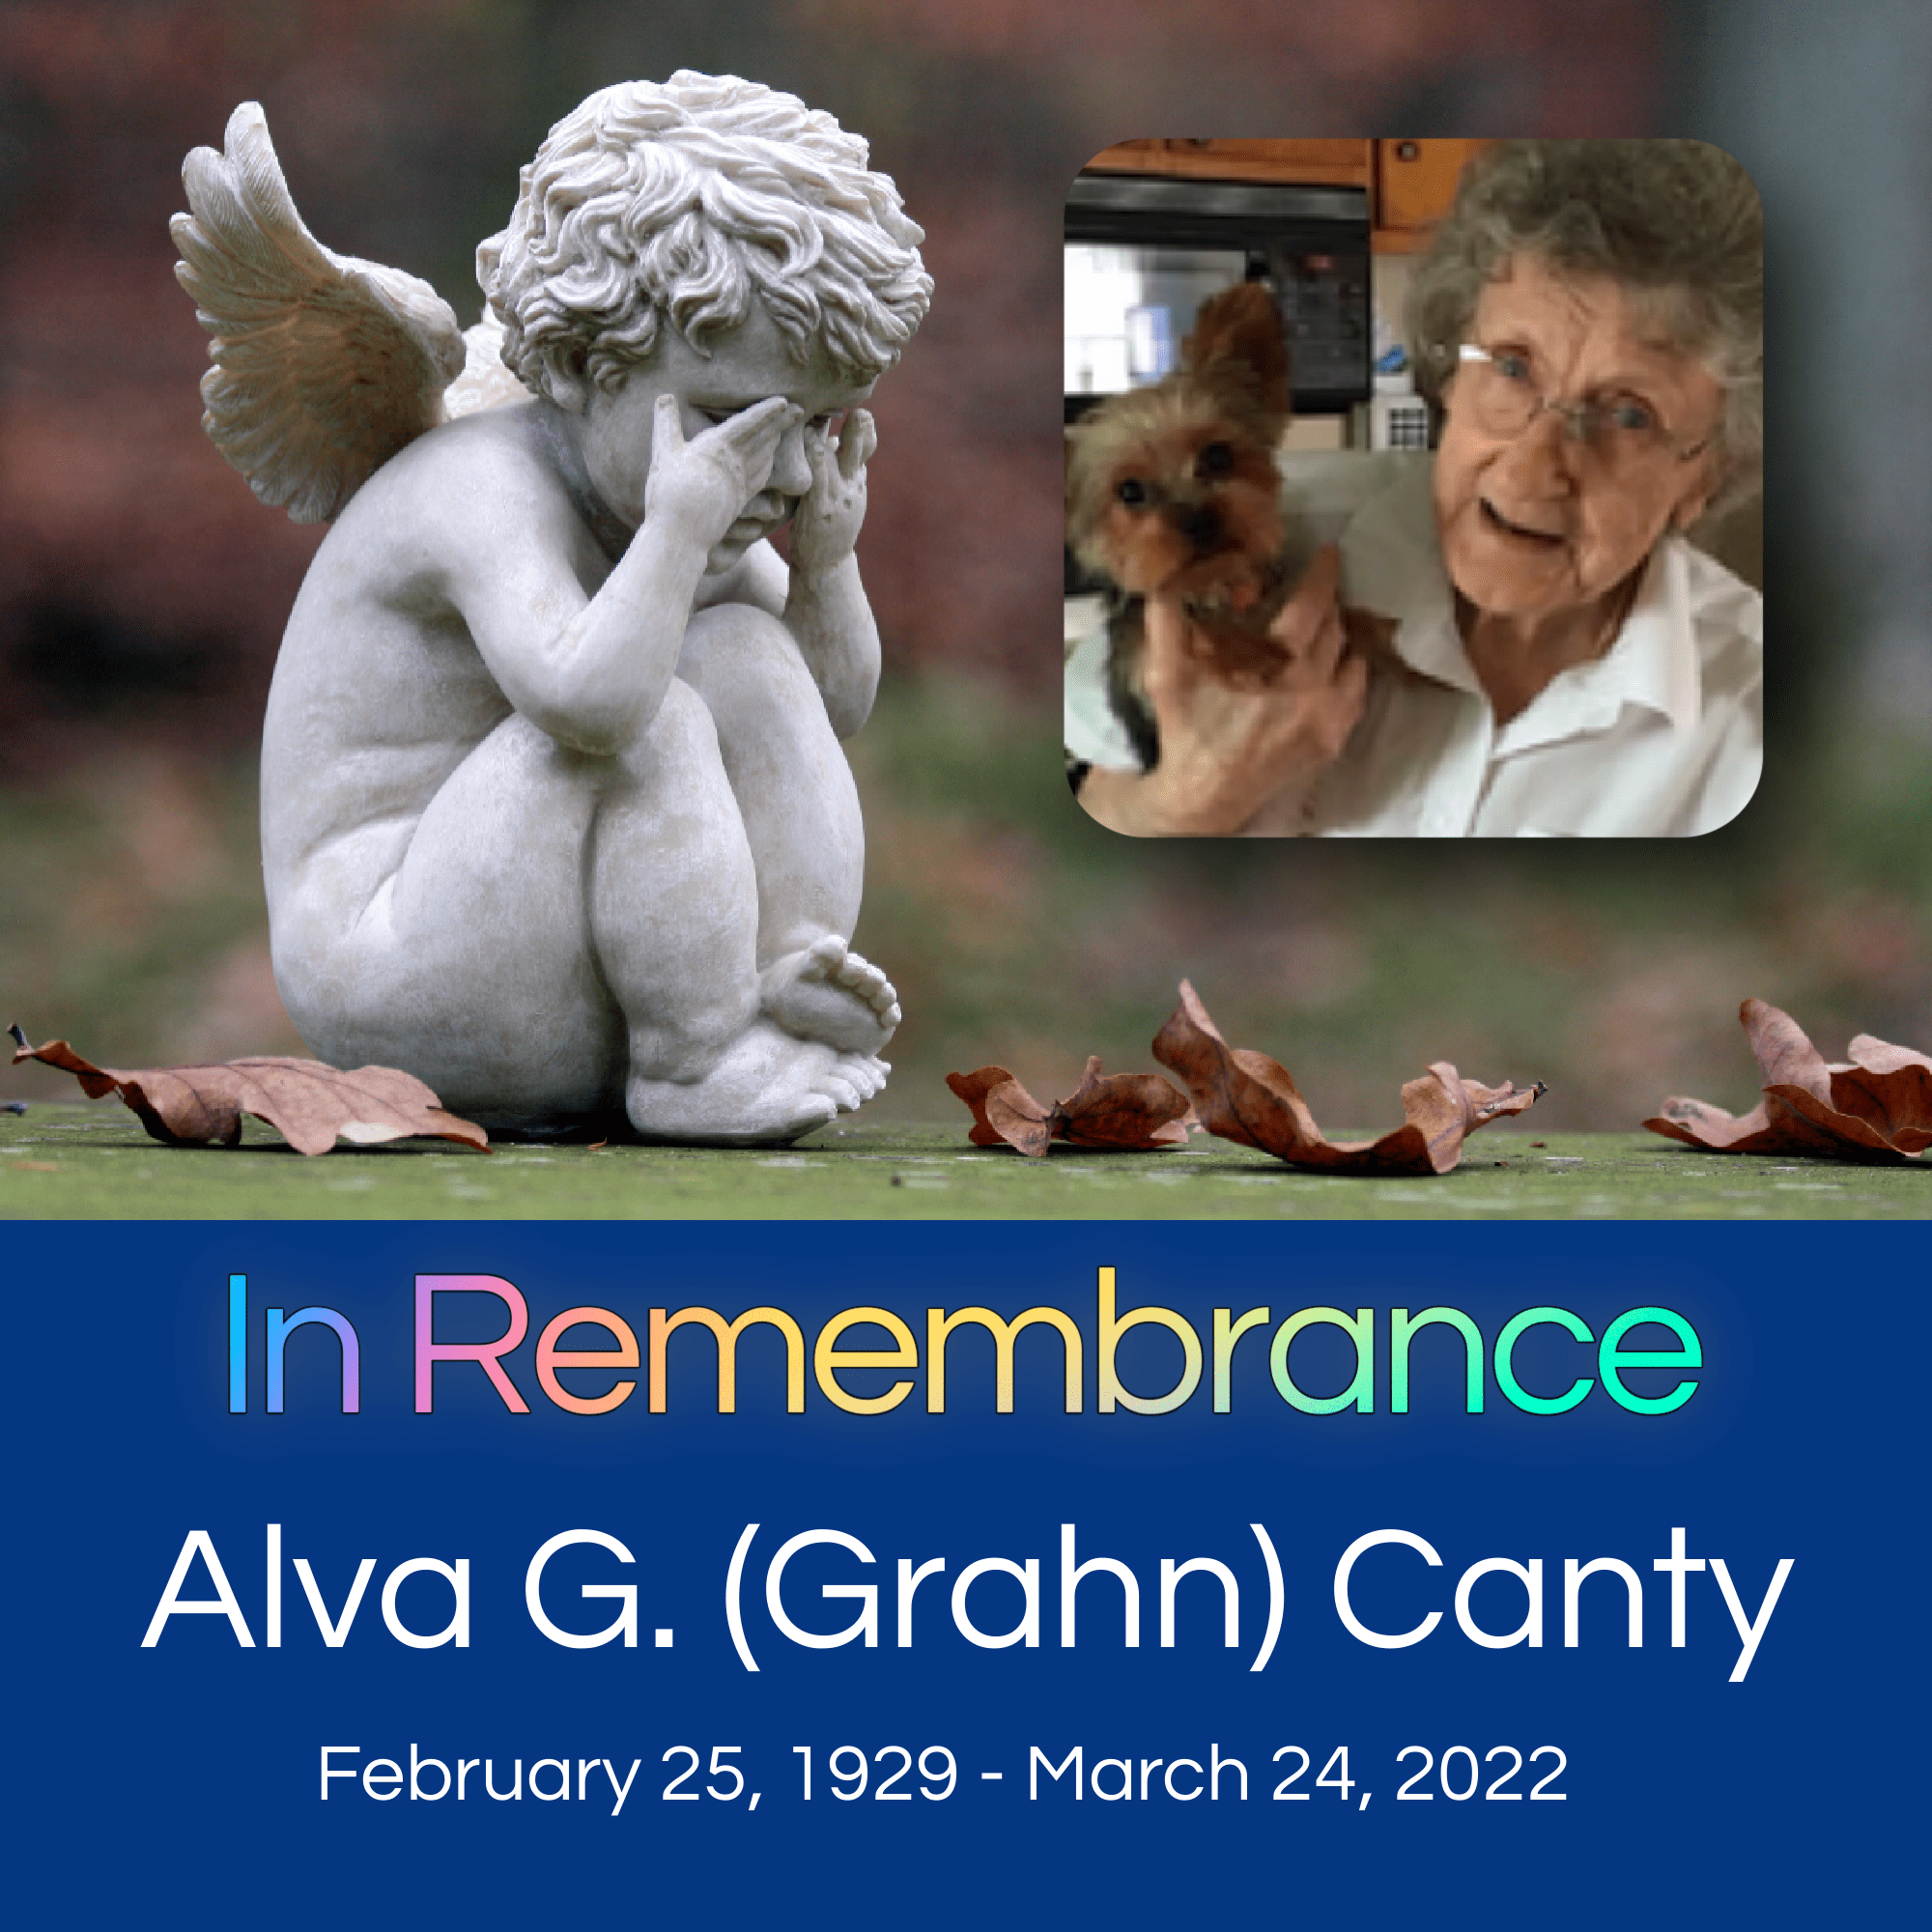 In Remembrance of Alva G. (Grahn) Canty